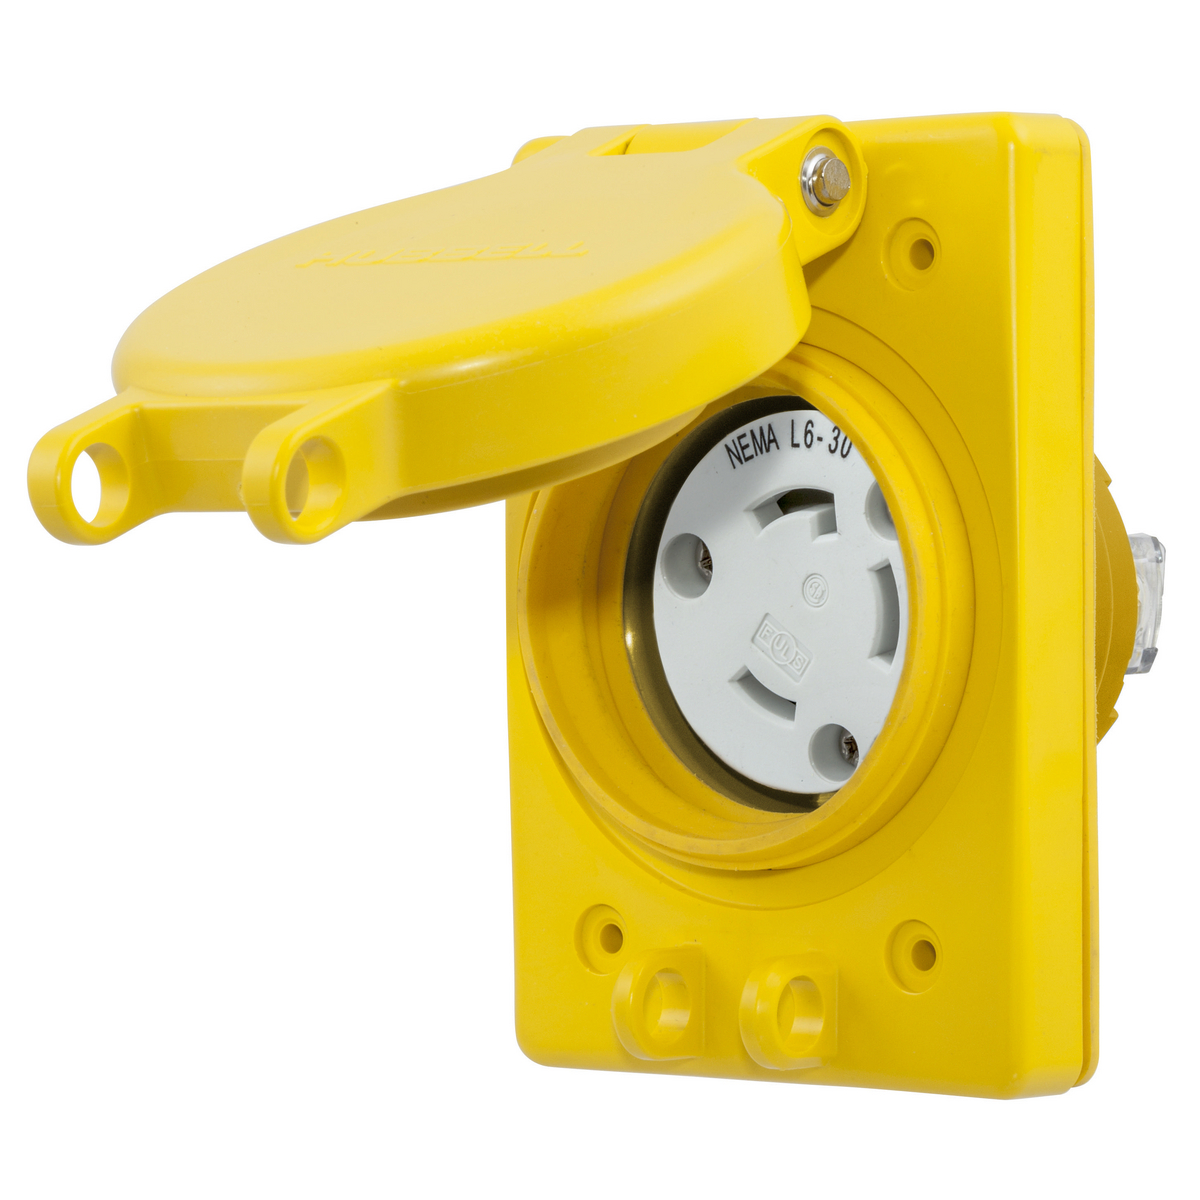 Watertight Locking Receptacle,30,Yellow 69W48 Pass And Seymour NEMA L630-R 785007032994